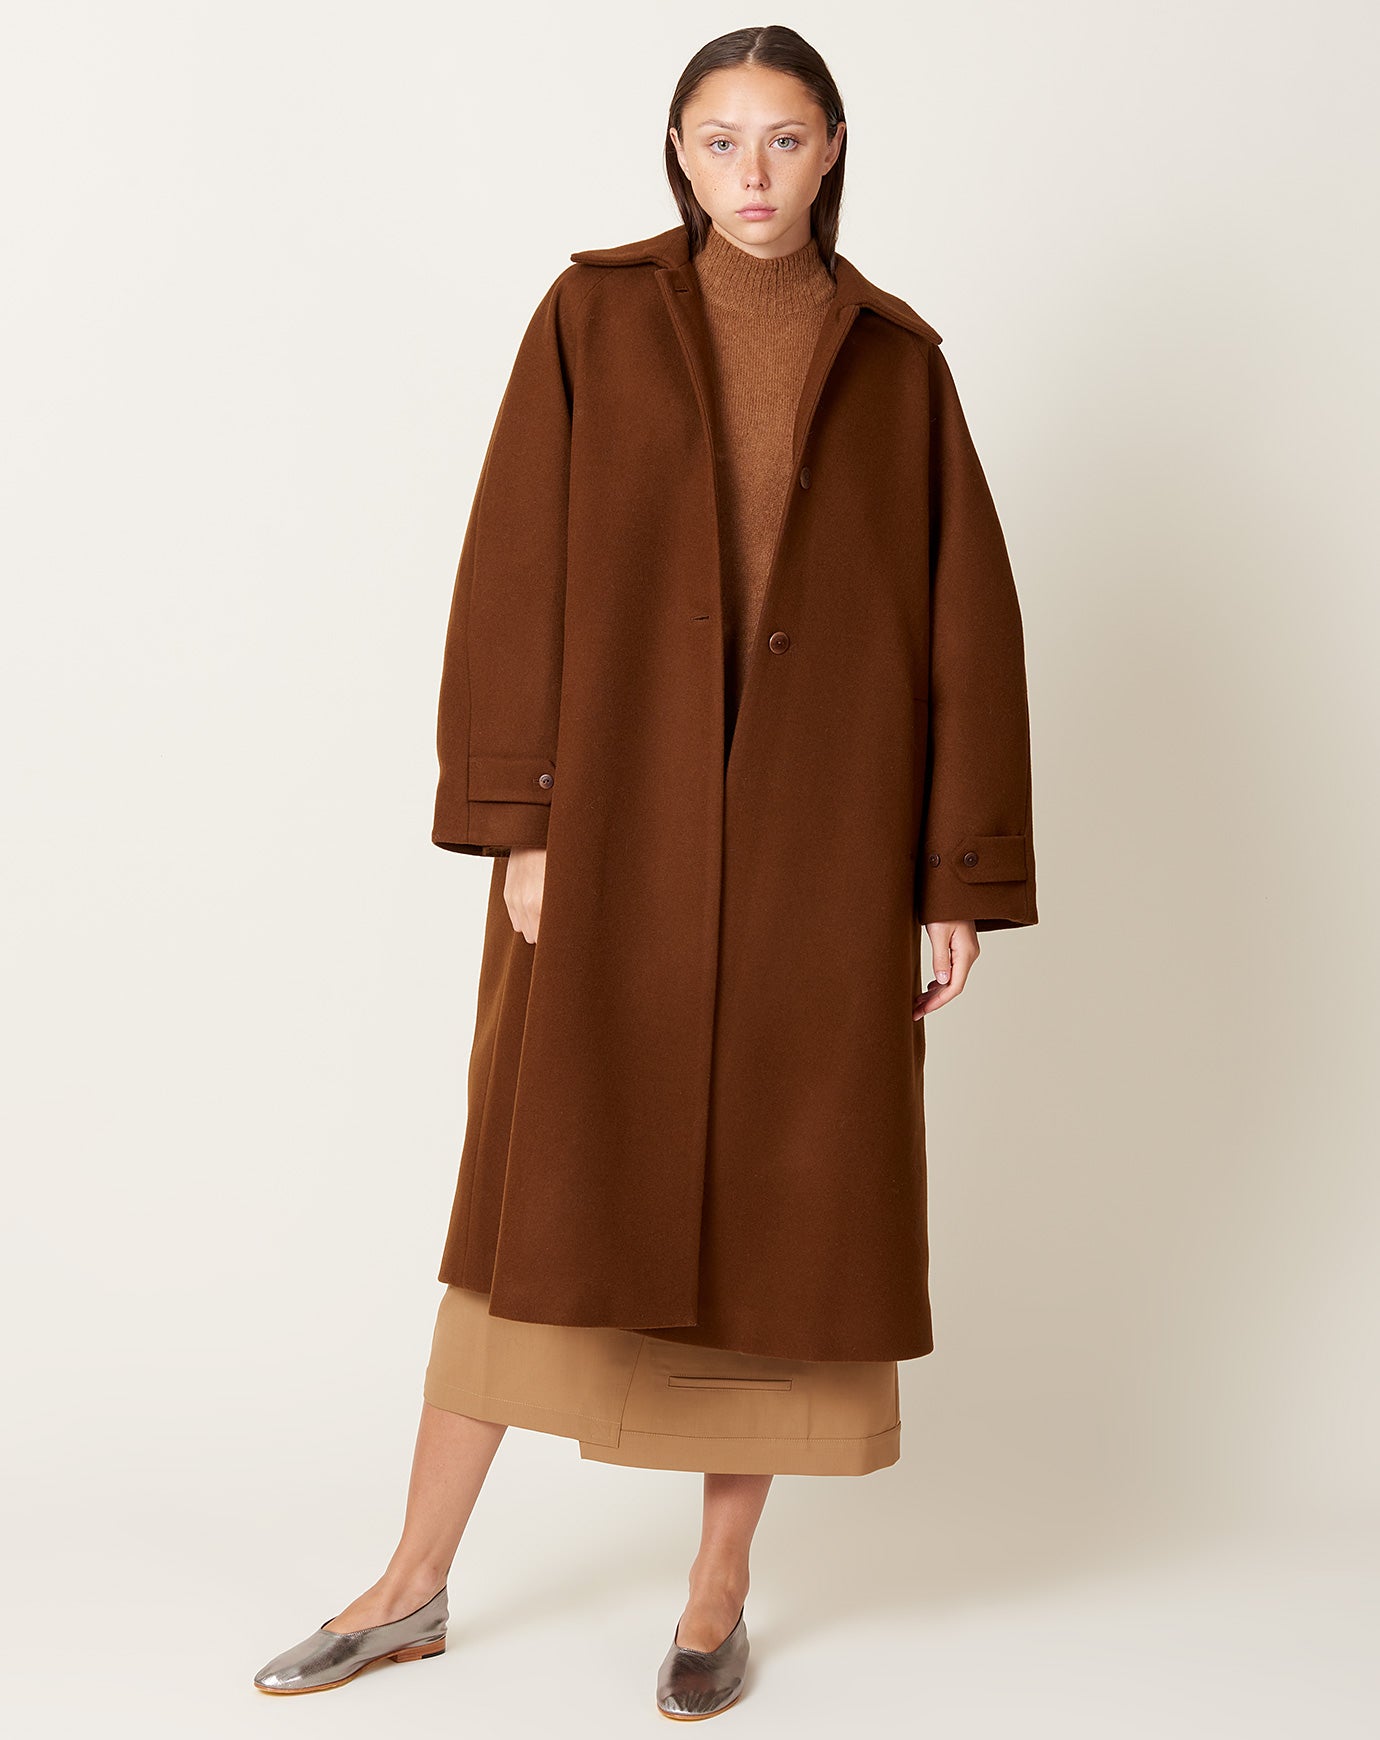 Cordera Wool Coat in Camel